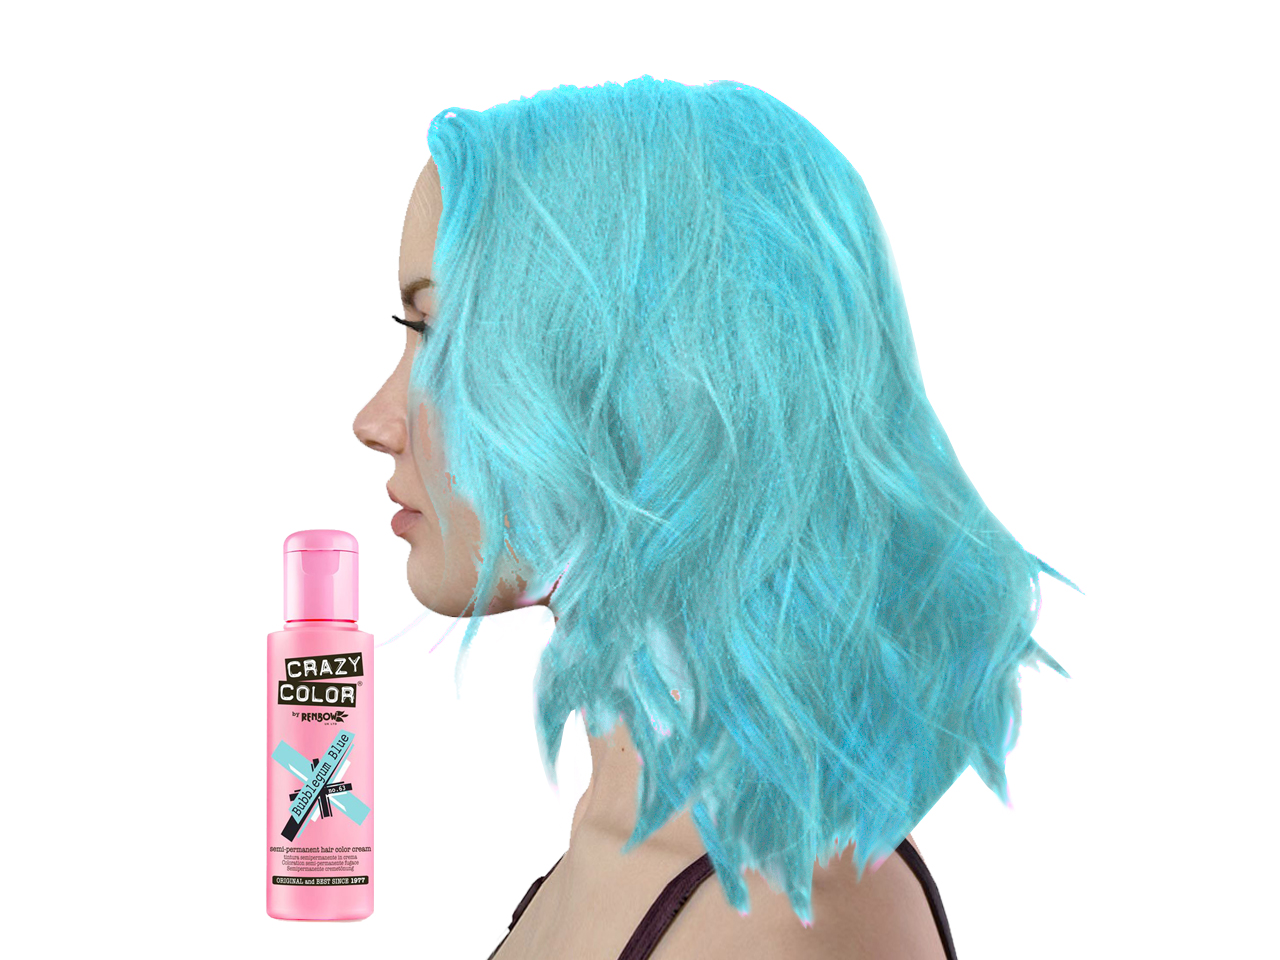 1. "Bubblegum Blue Hair Dye for Boys" - wide 8